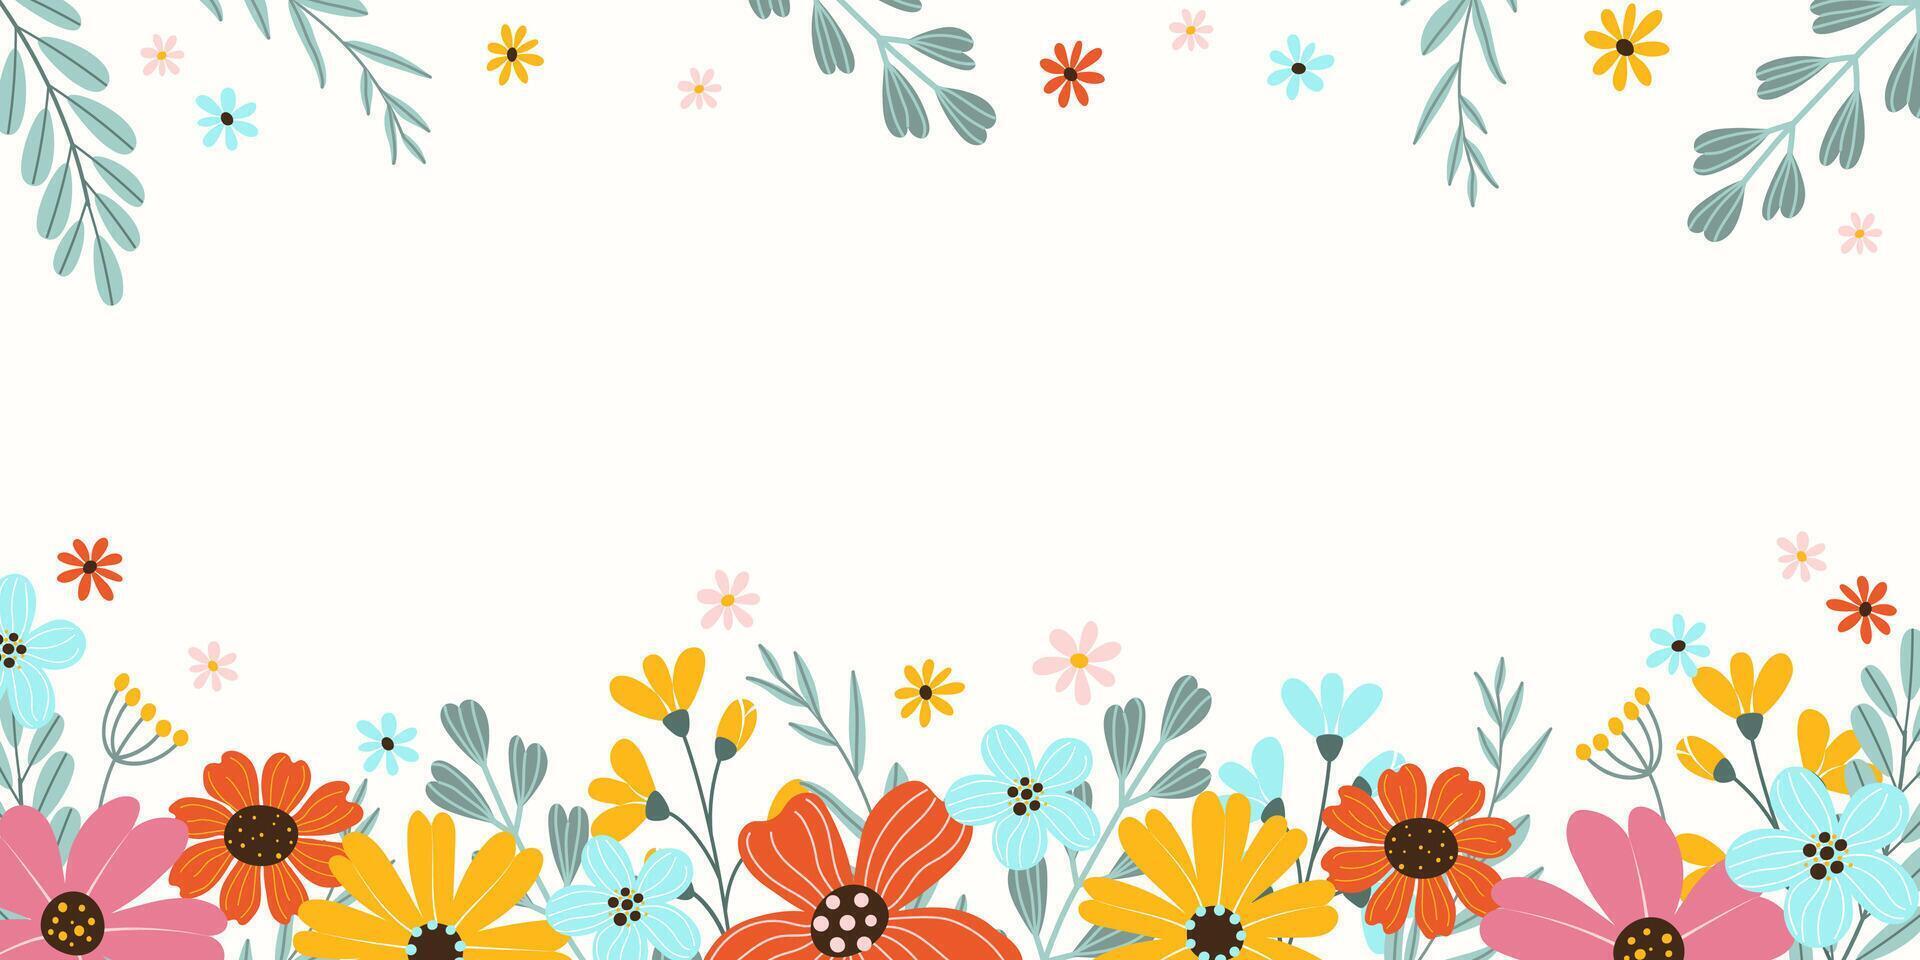 primavera rectangular festivo bandera en blanco antecedentes con sitio para texto en plano vector estilo. mano dibujado grande vistoso flores, sucursales. fiesta estacional floral modelo.